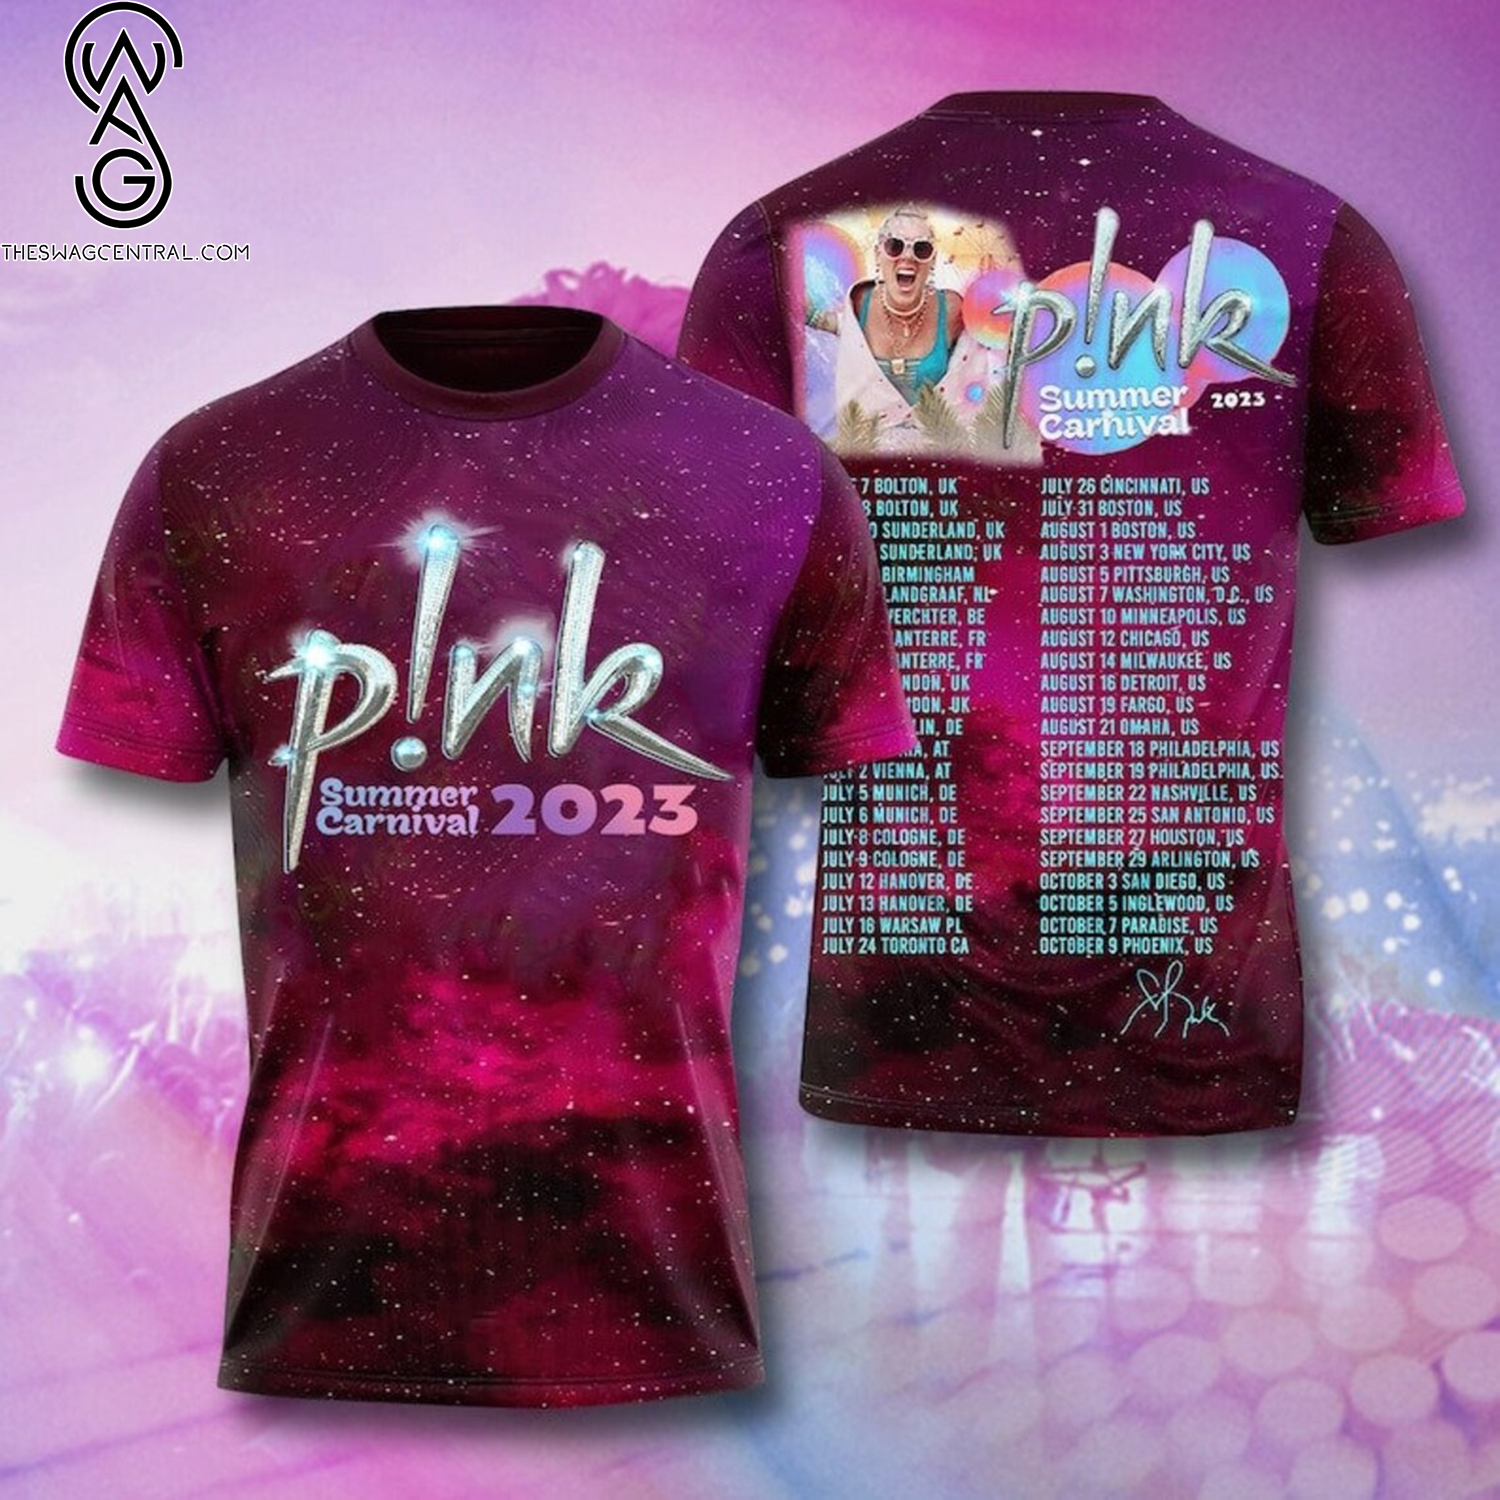 P!nk Summer Carnival 2023 Pink Singer Tour Shirt